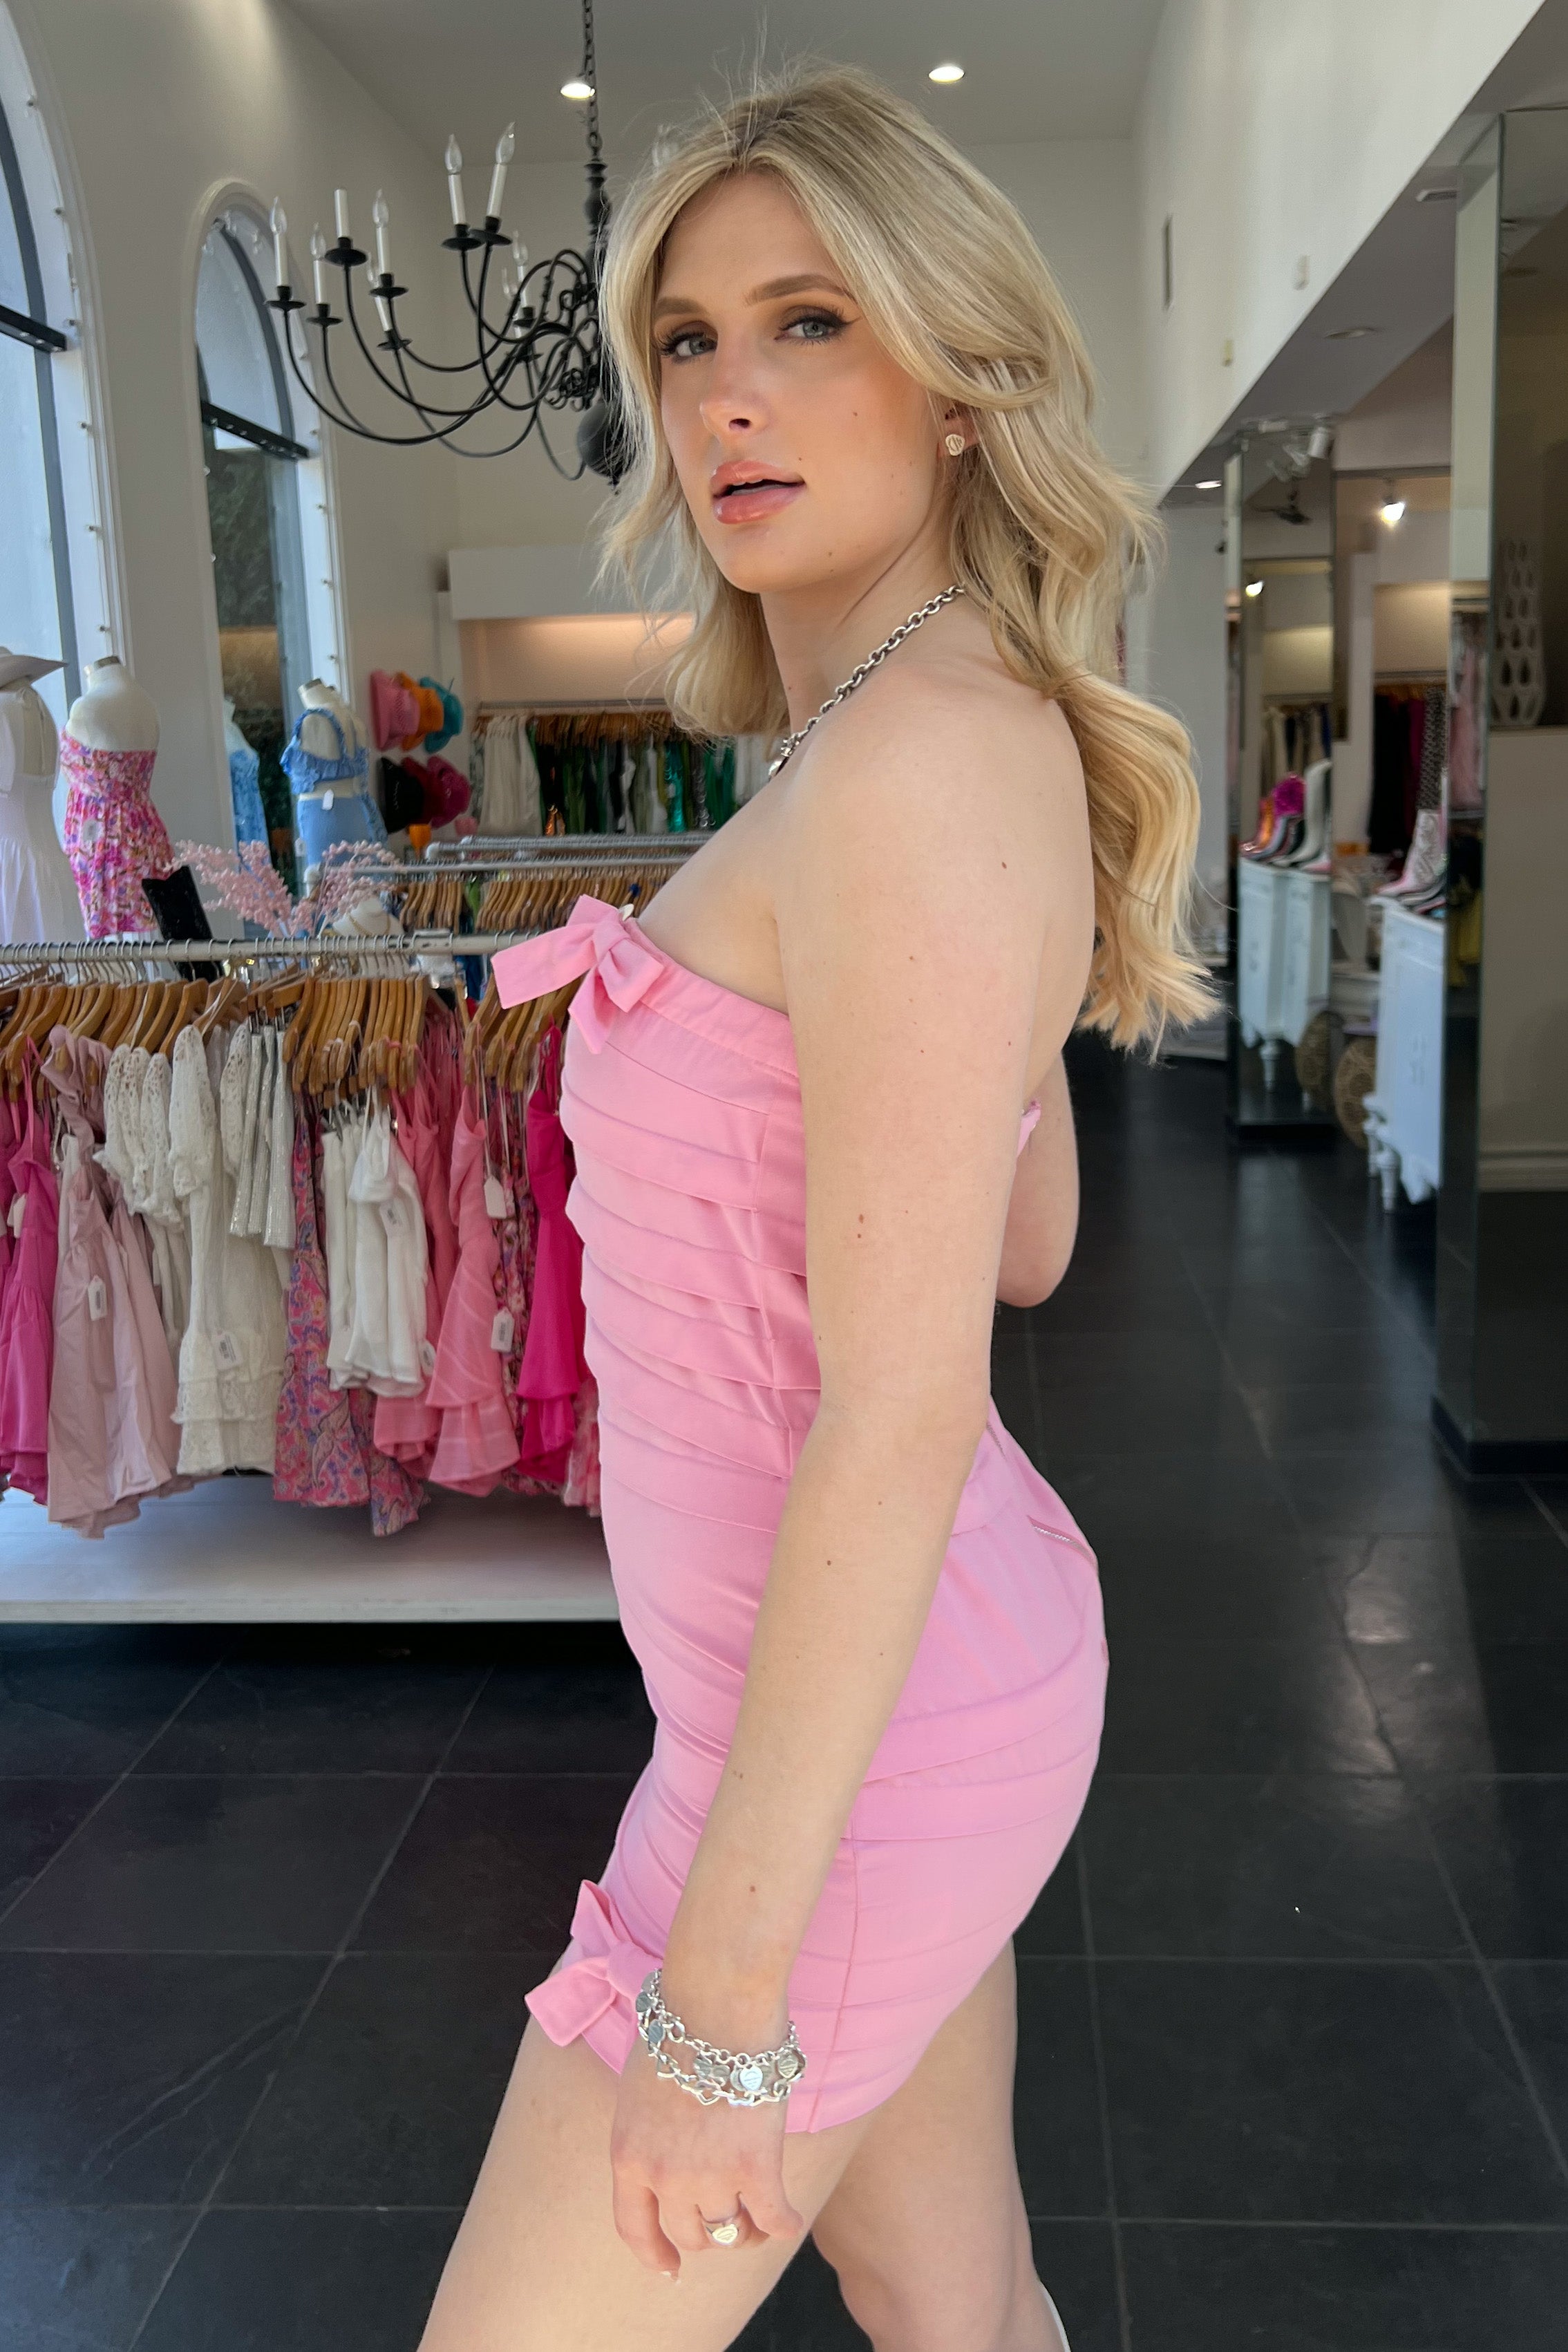 Put A Bow On It Dress-Pink